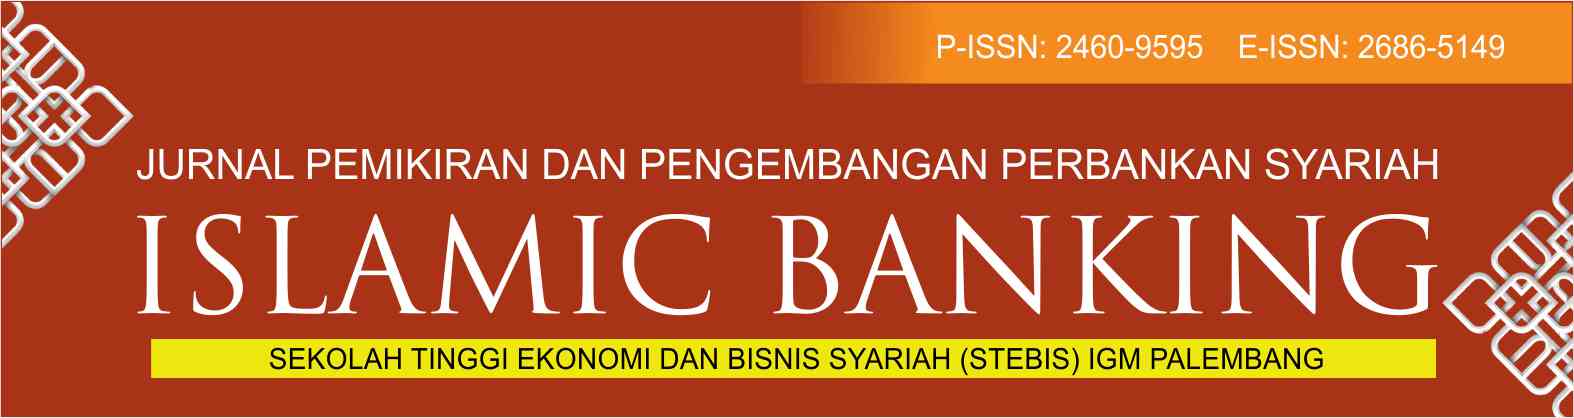 header jurnal islamic banking